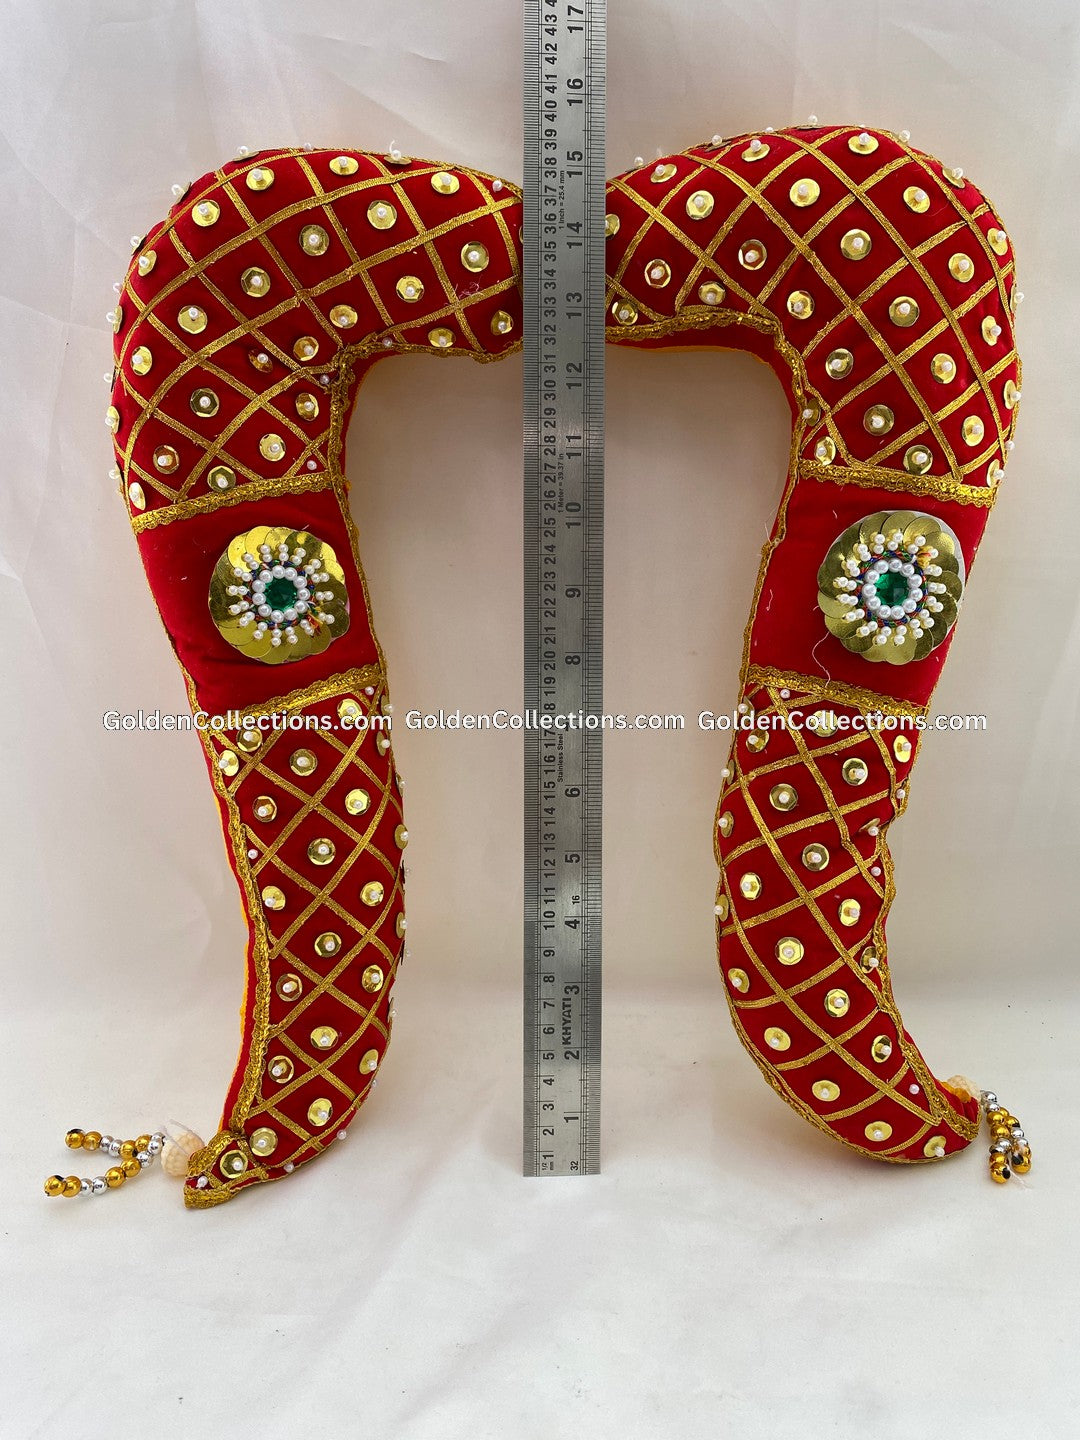 Vagamalai Bhujalu - Varalakshmi Idol Decoration Items Online Medium Red DVT-005